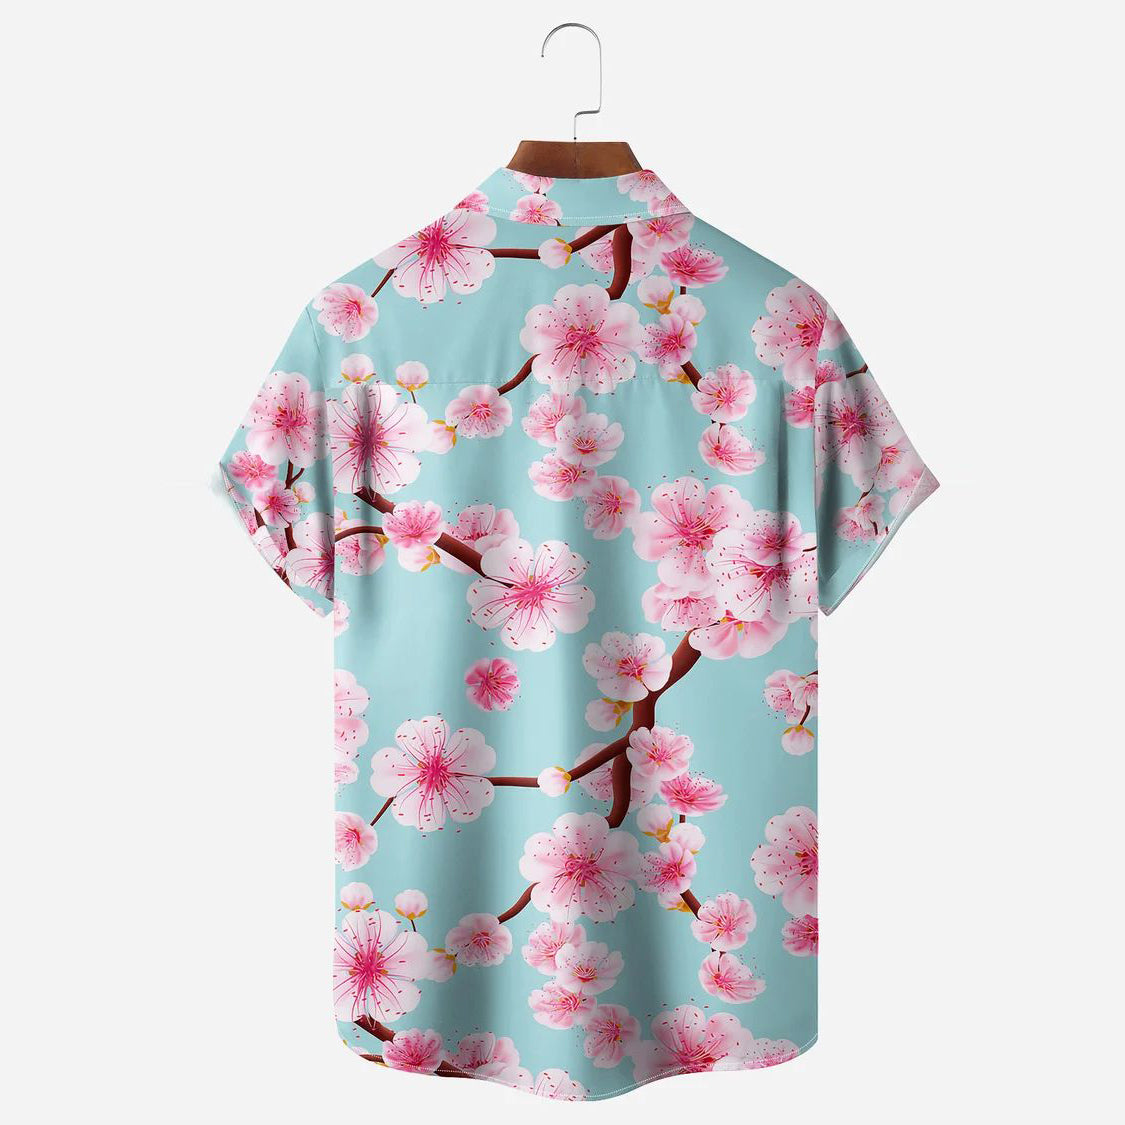 Fashion floral short-sleeved casual shirt